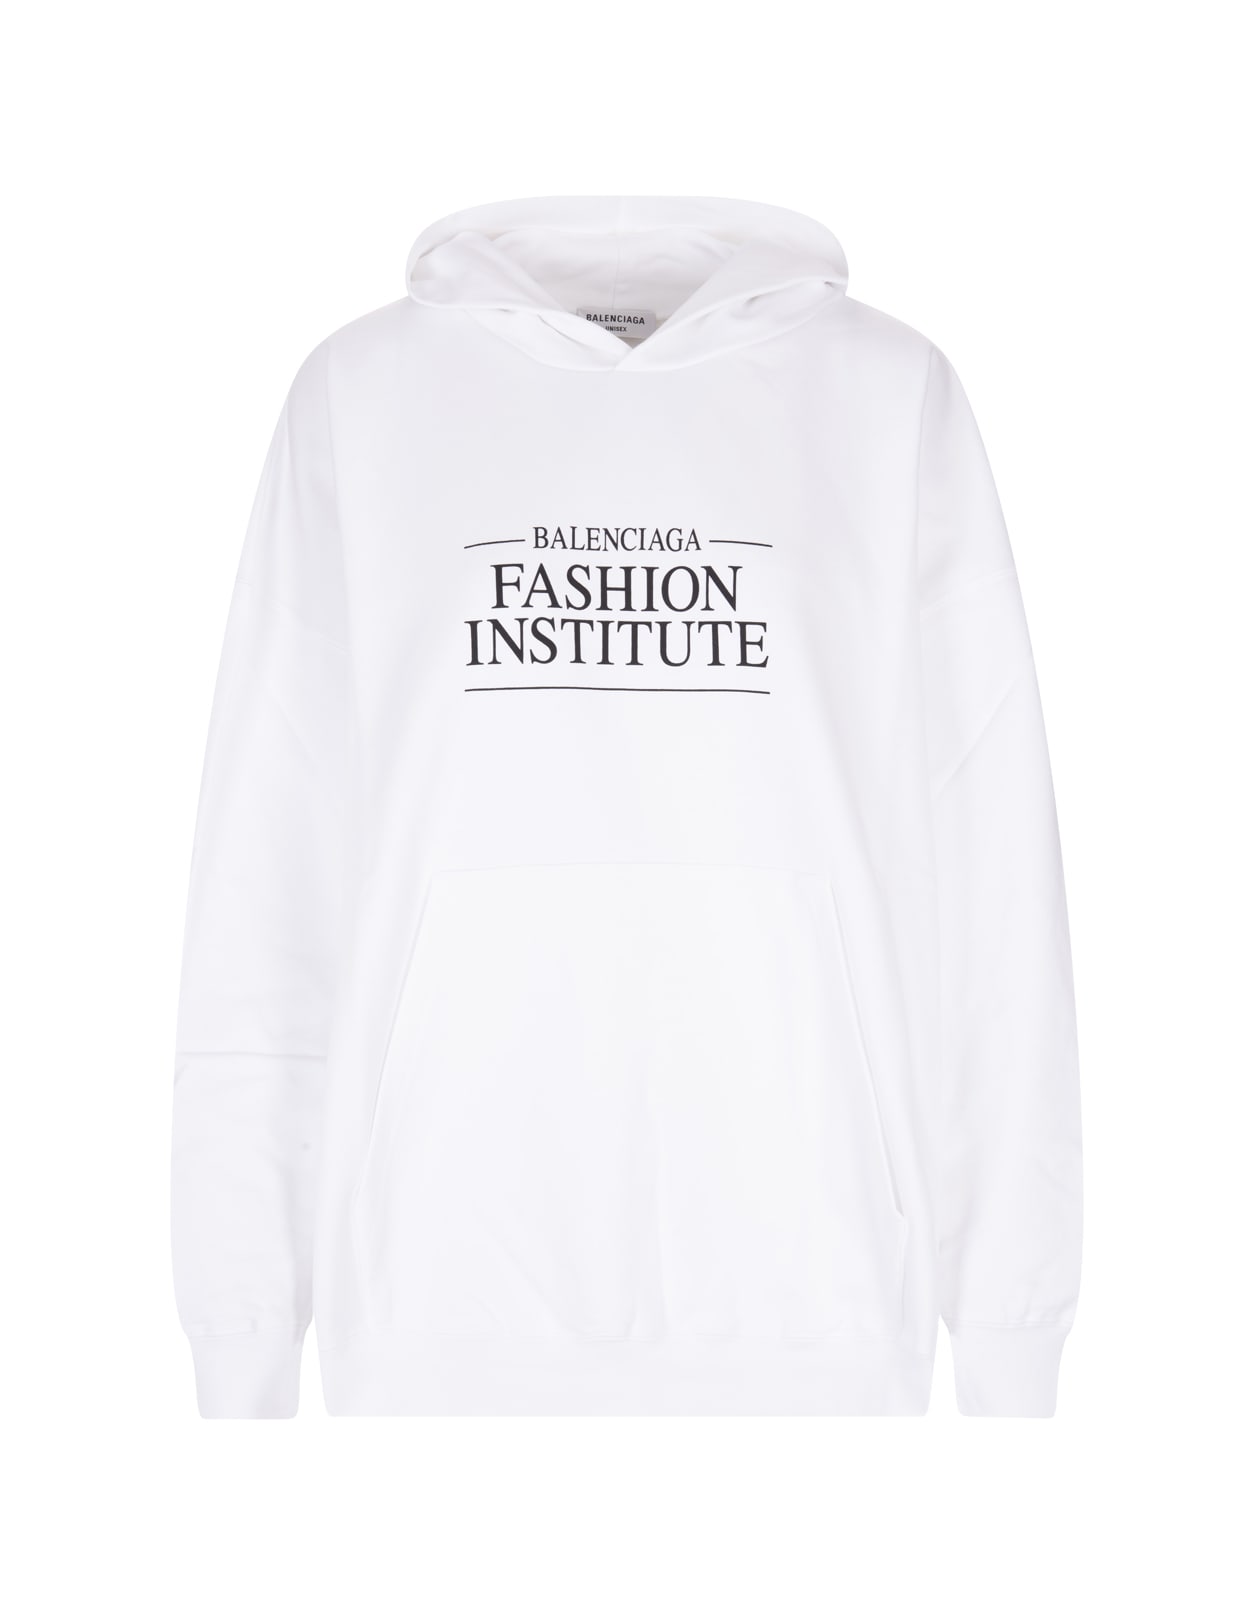 Balenciaga Unisex White Fashion Institute Large Fit Hoodie